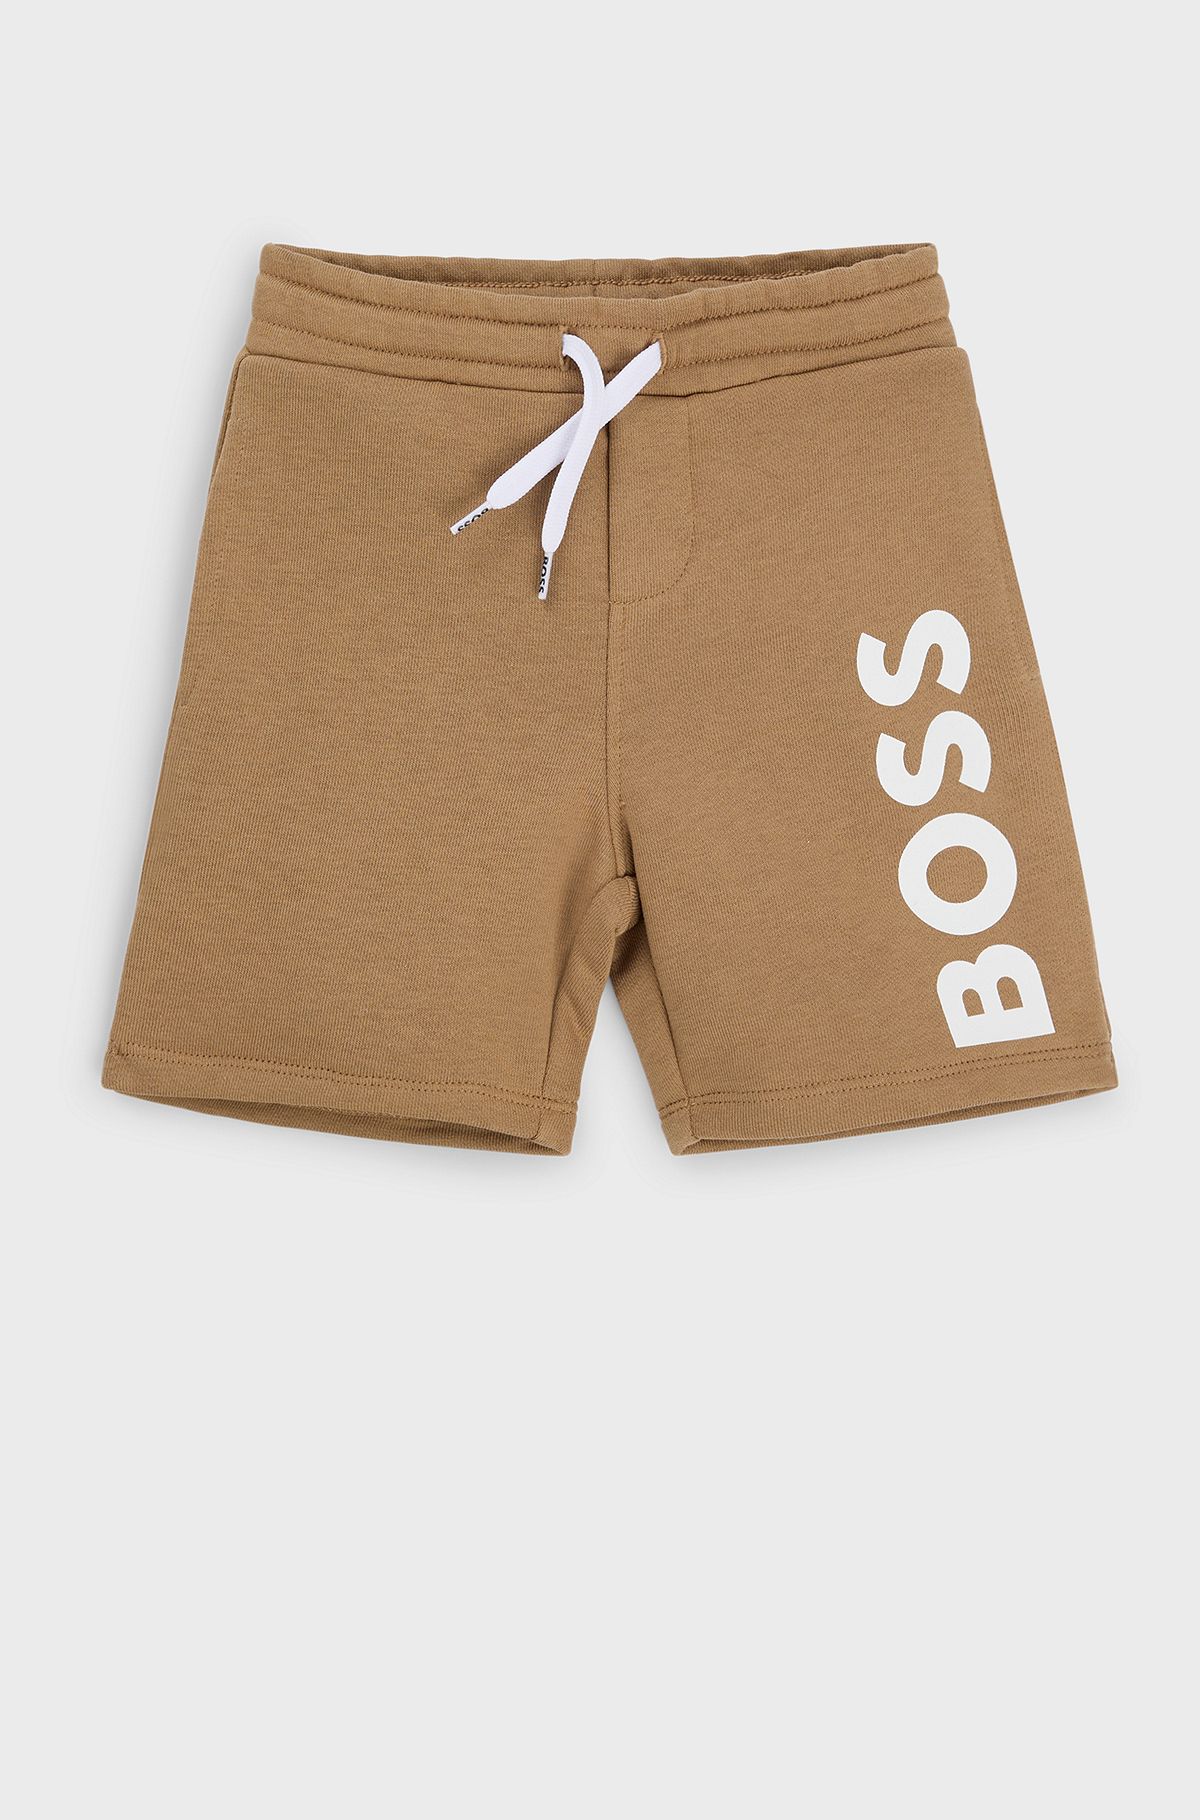 Kids' fleece shorts with vertical logo print, Brown